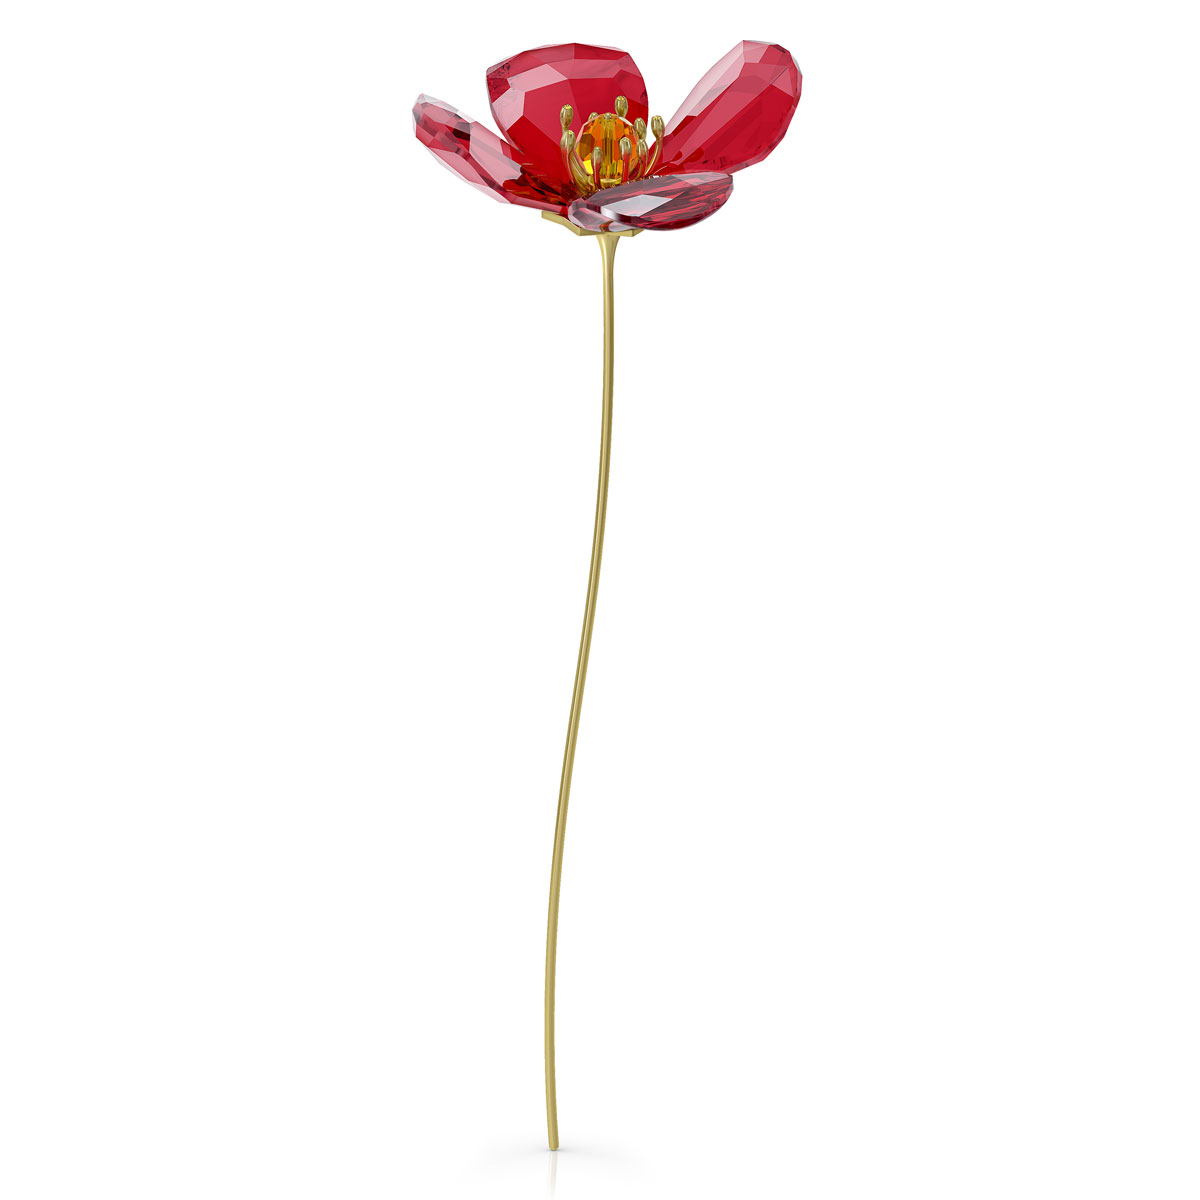 Swarovski Flowers Garden Tales, Red Poppy